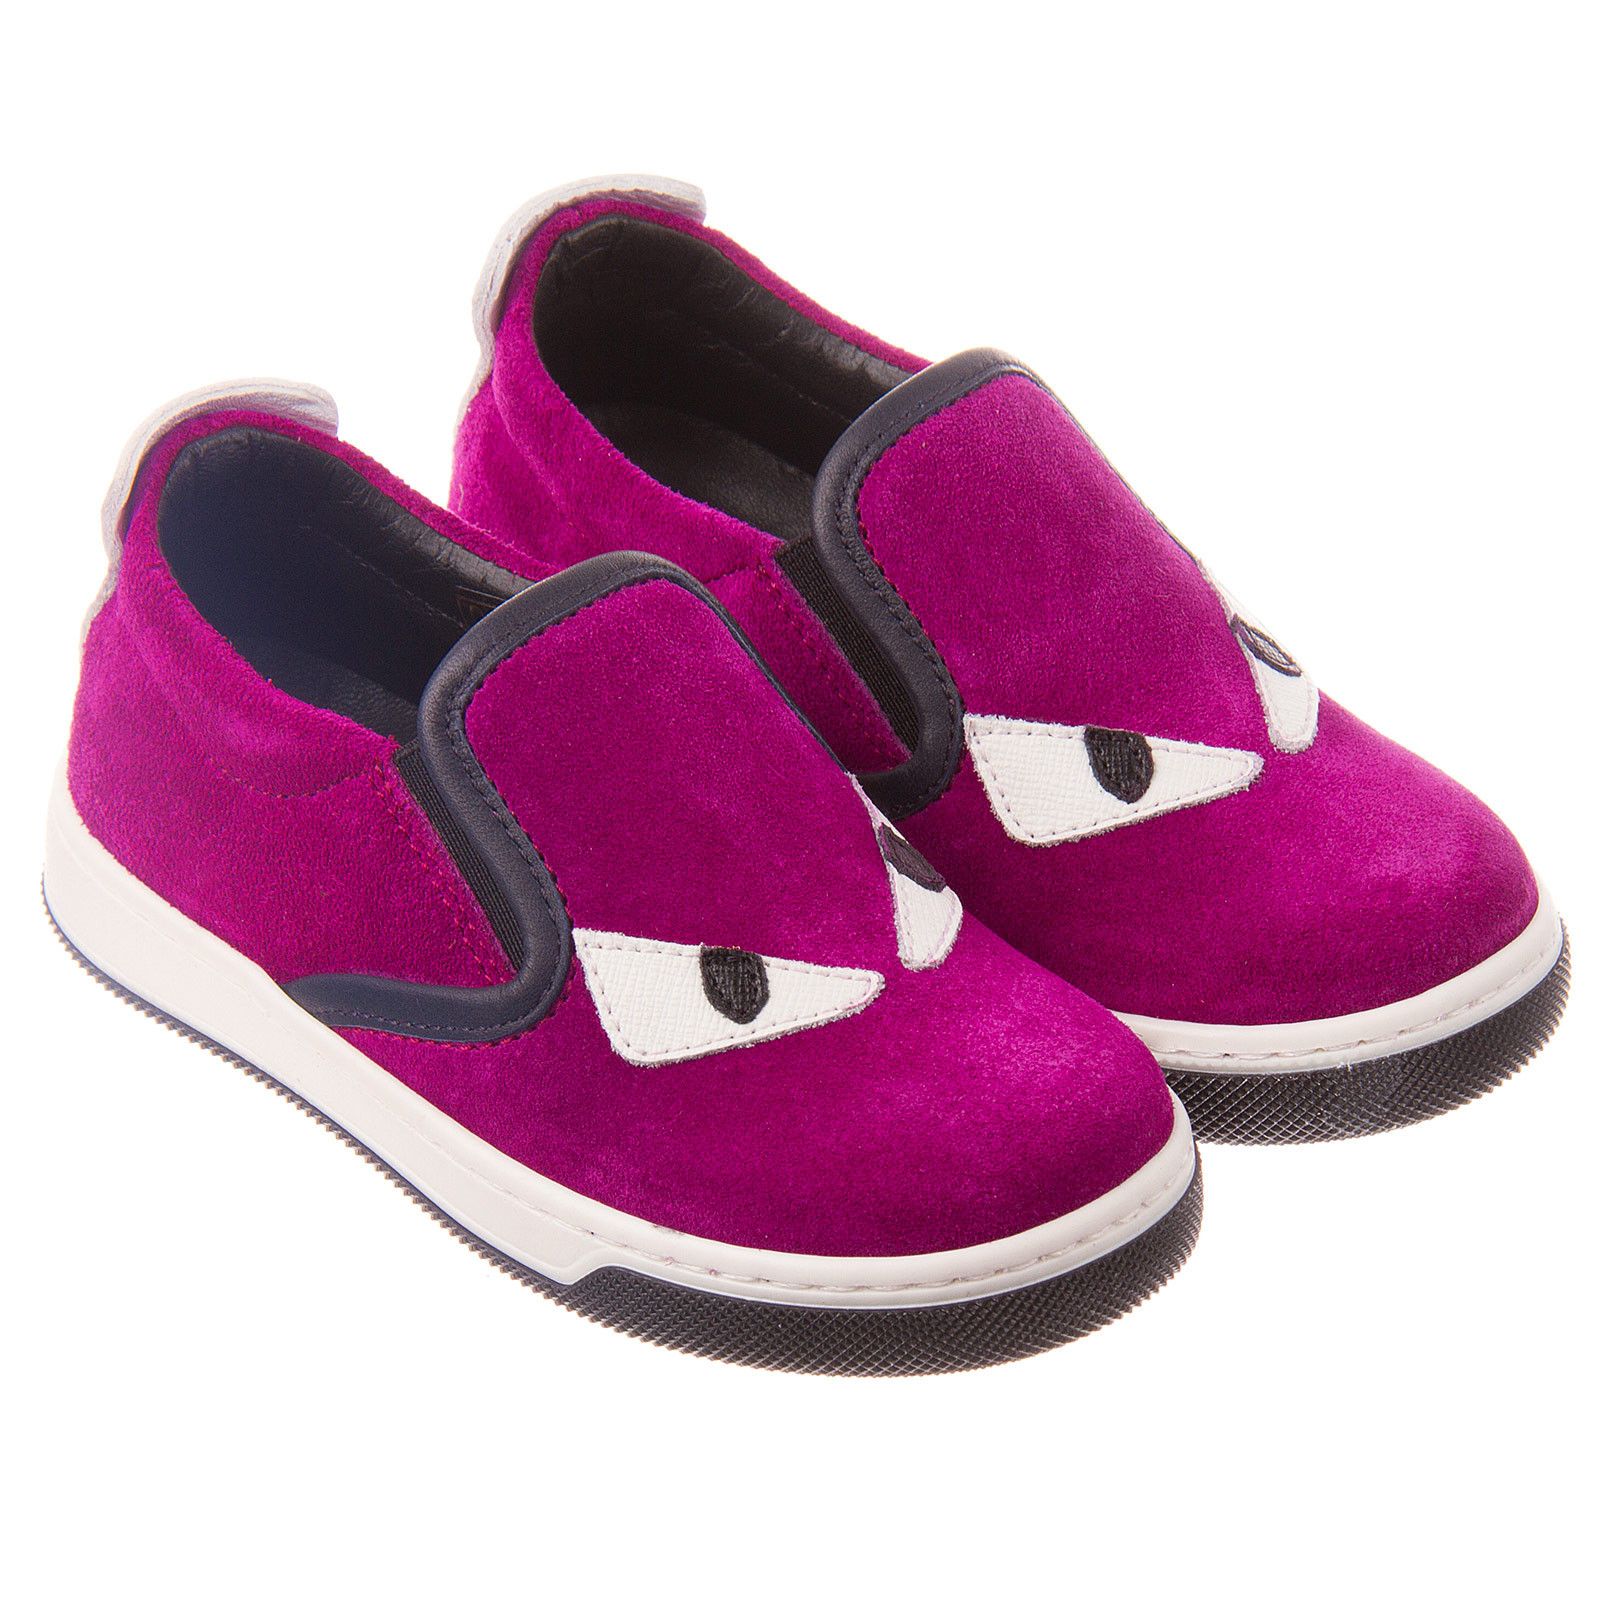 Boys&Girls Purple Suede Monster Trainers - CÉMAROSE | Children's Fashion Store - 1